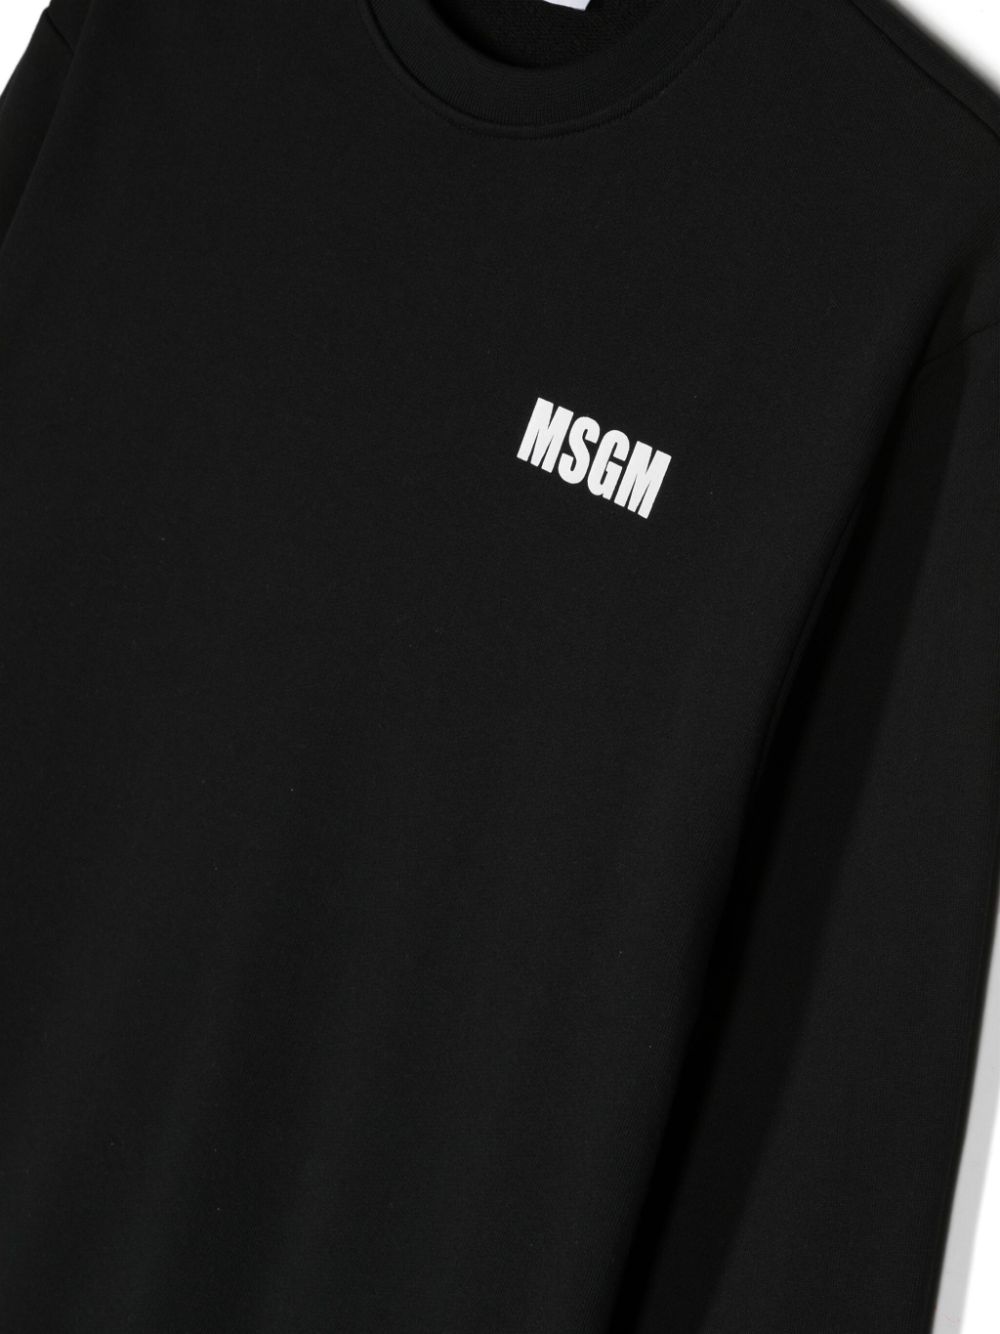 Black sweatshirt for boys with logo